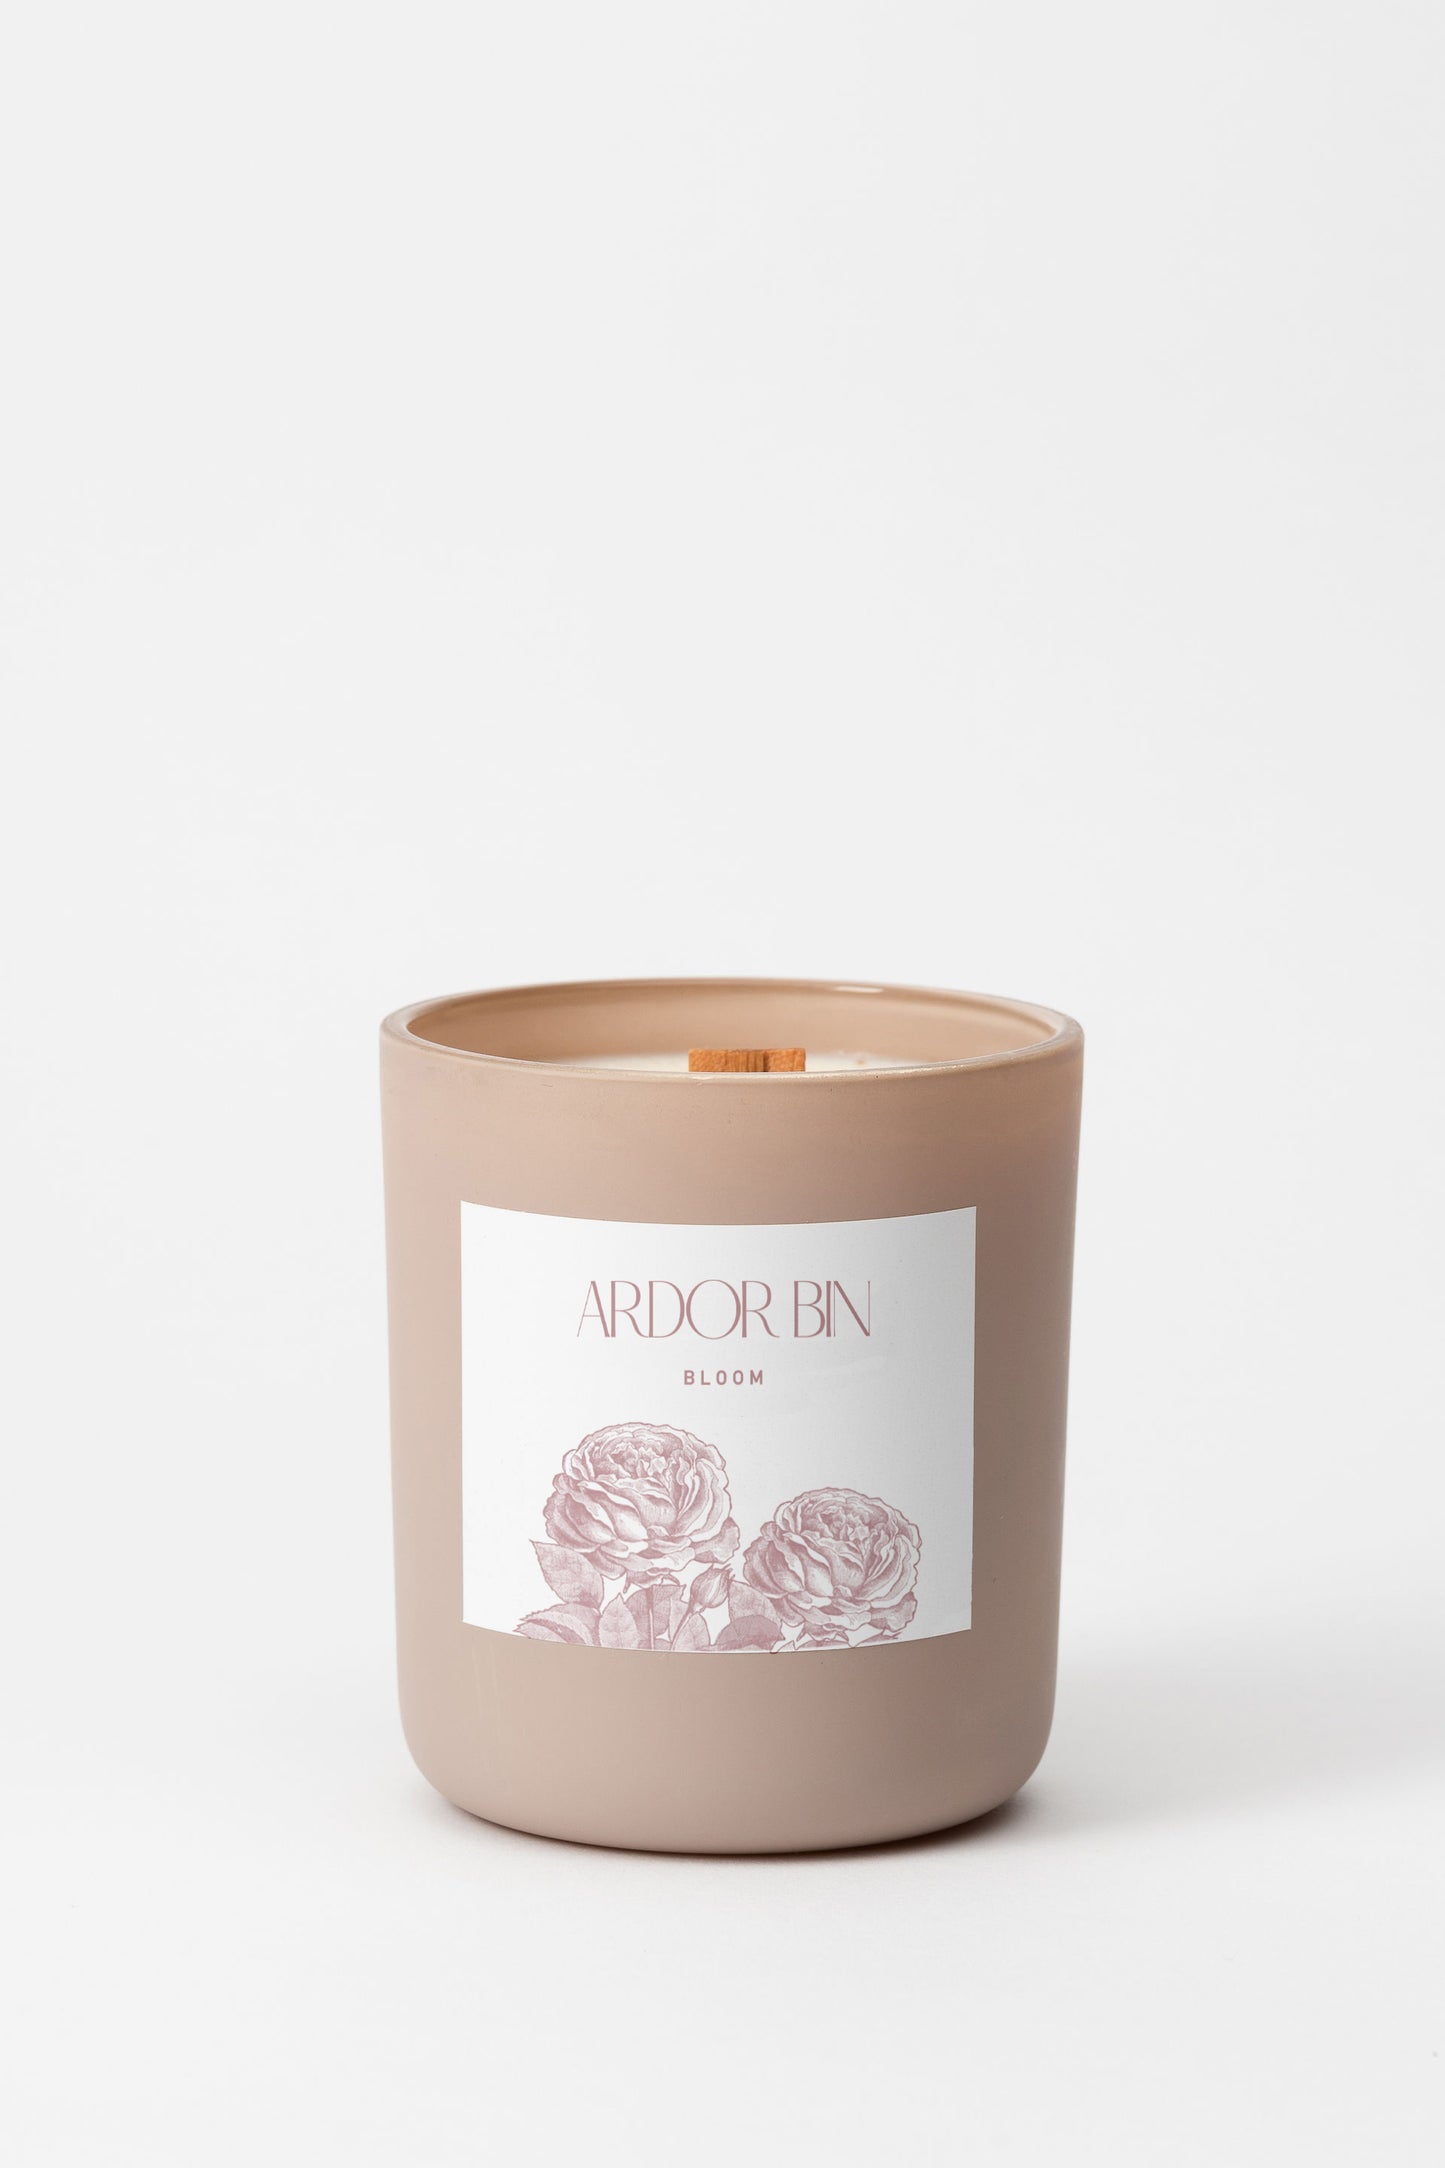 "Bloom" Wood Wick Botanical Candle - Ardor Bin 